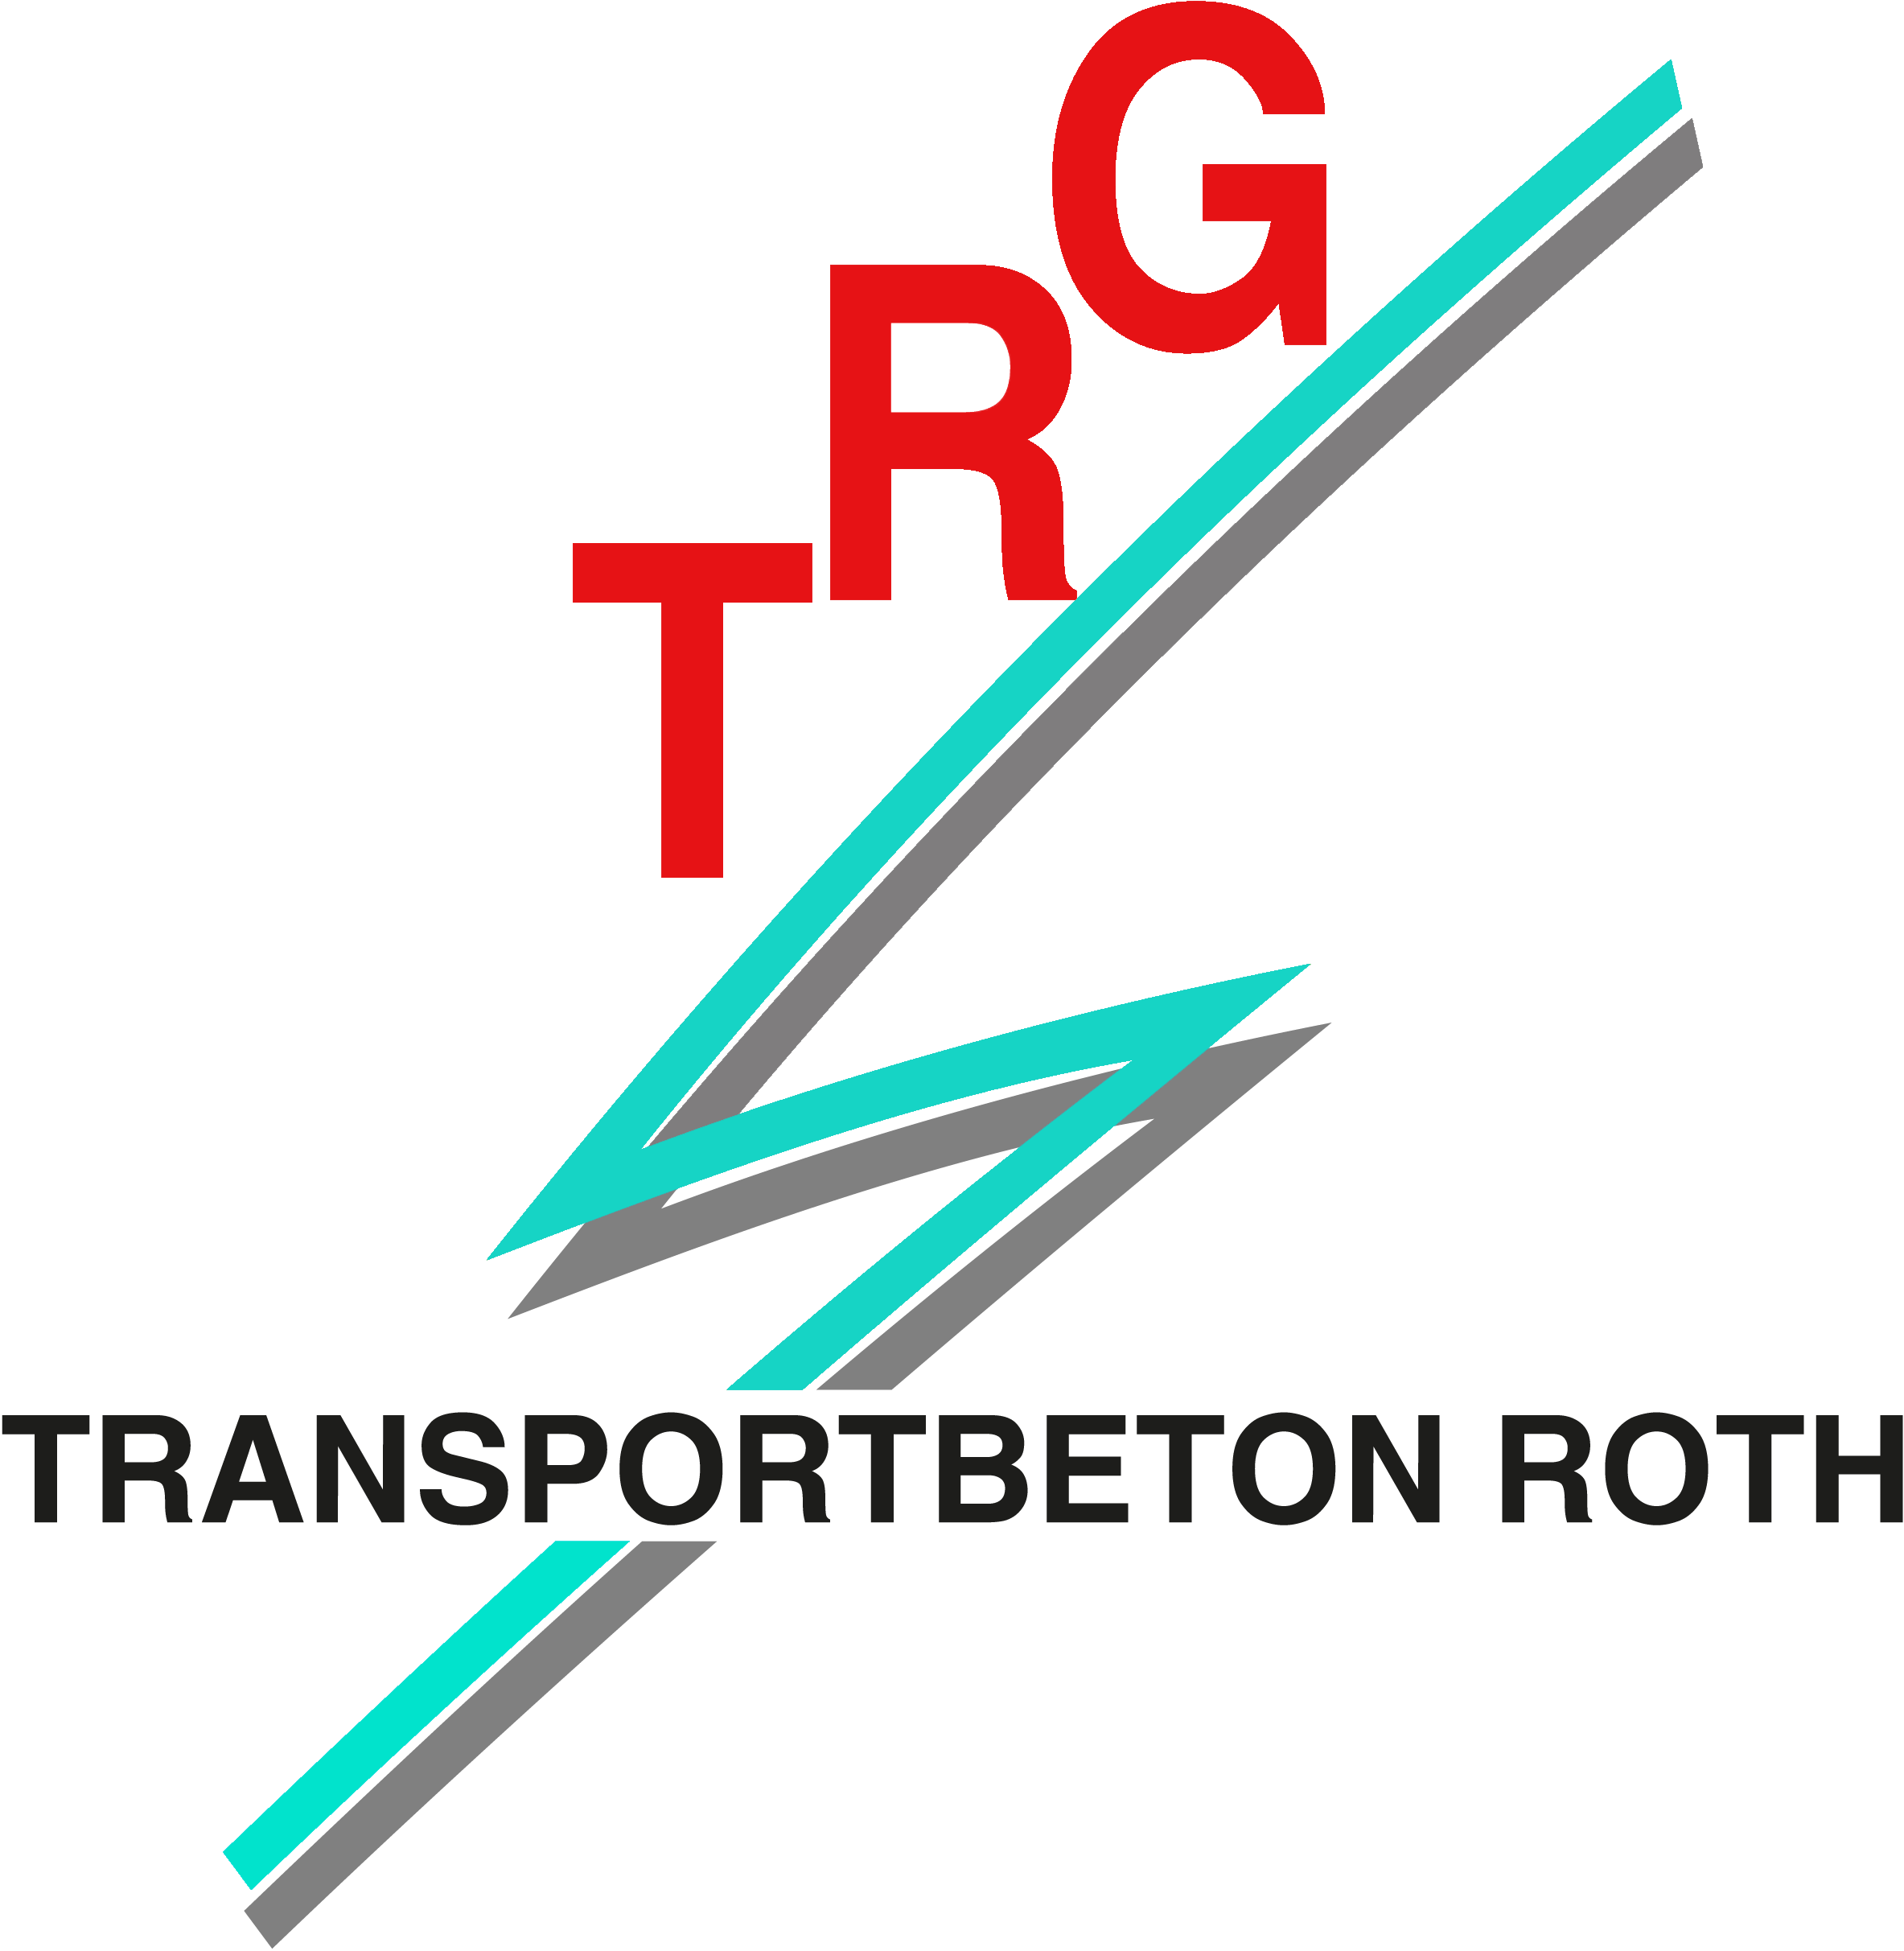 TRG-Transportbeton Roth GmbH & Co KG Vertriebsgesellschaft